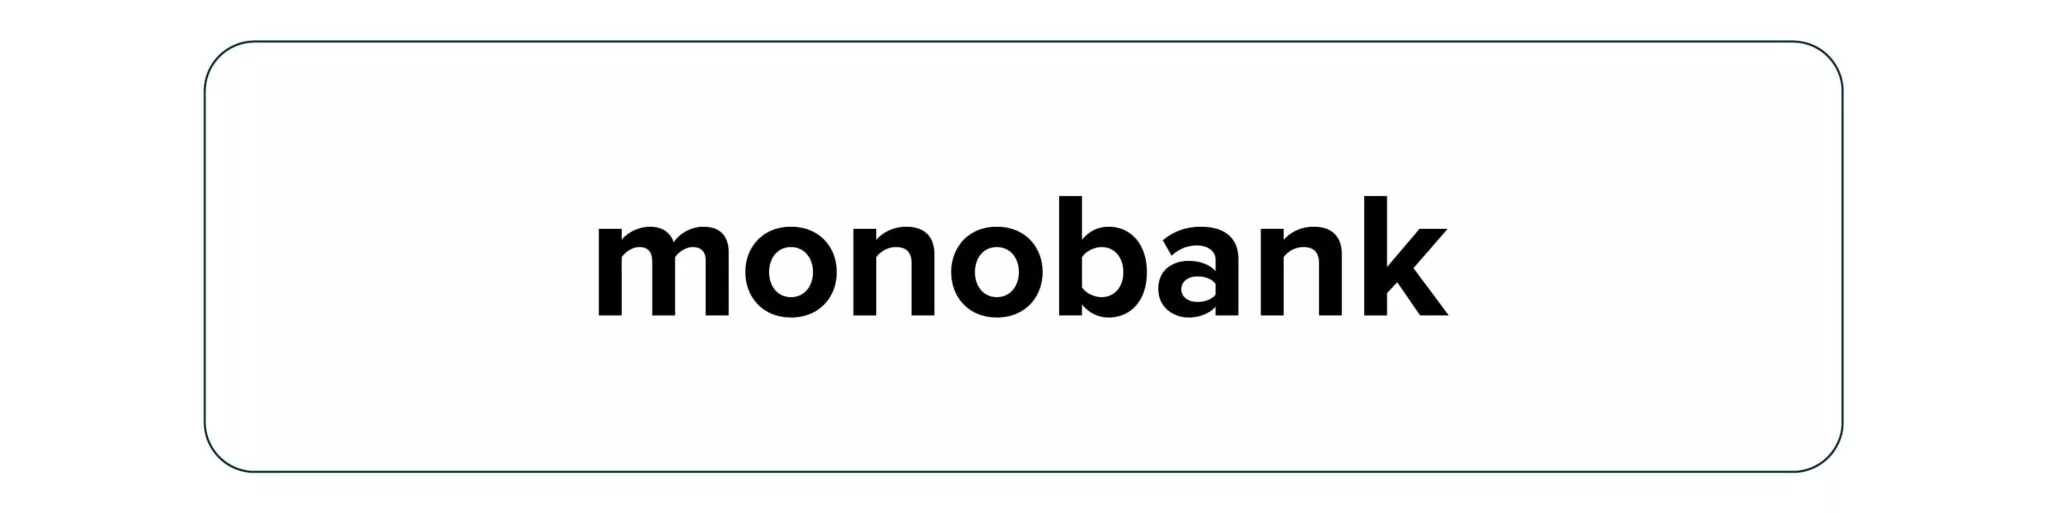 Top 3 Mobile Banking Apps: Monobank